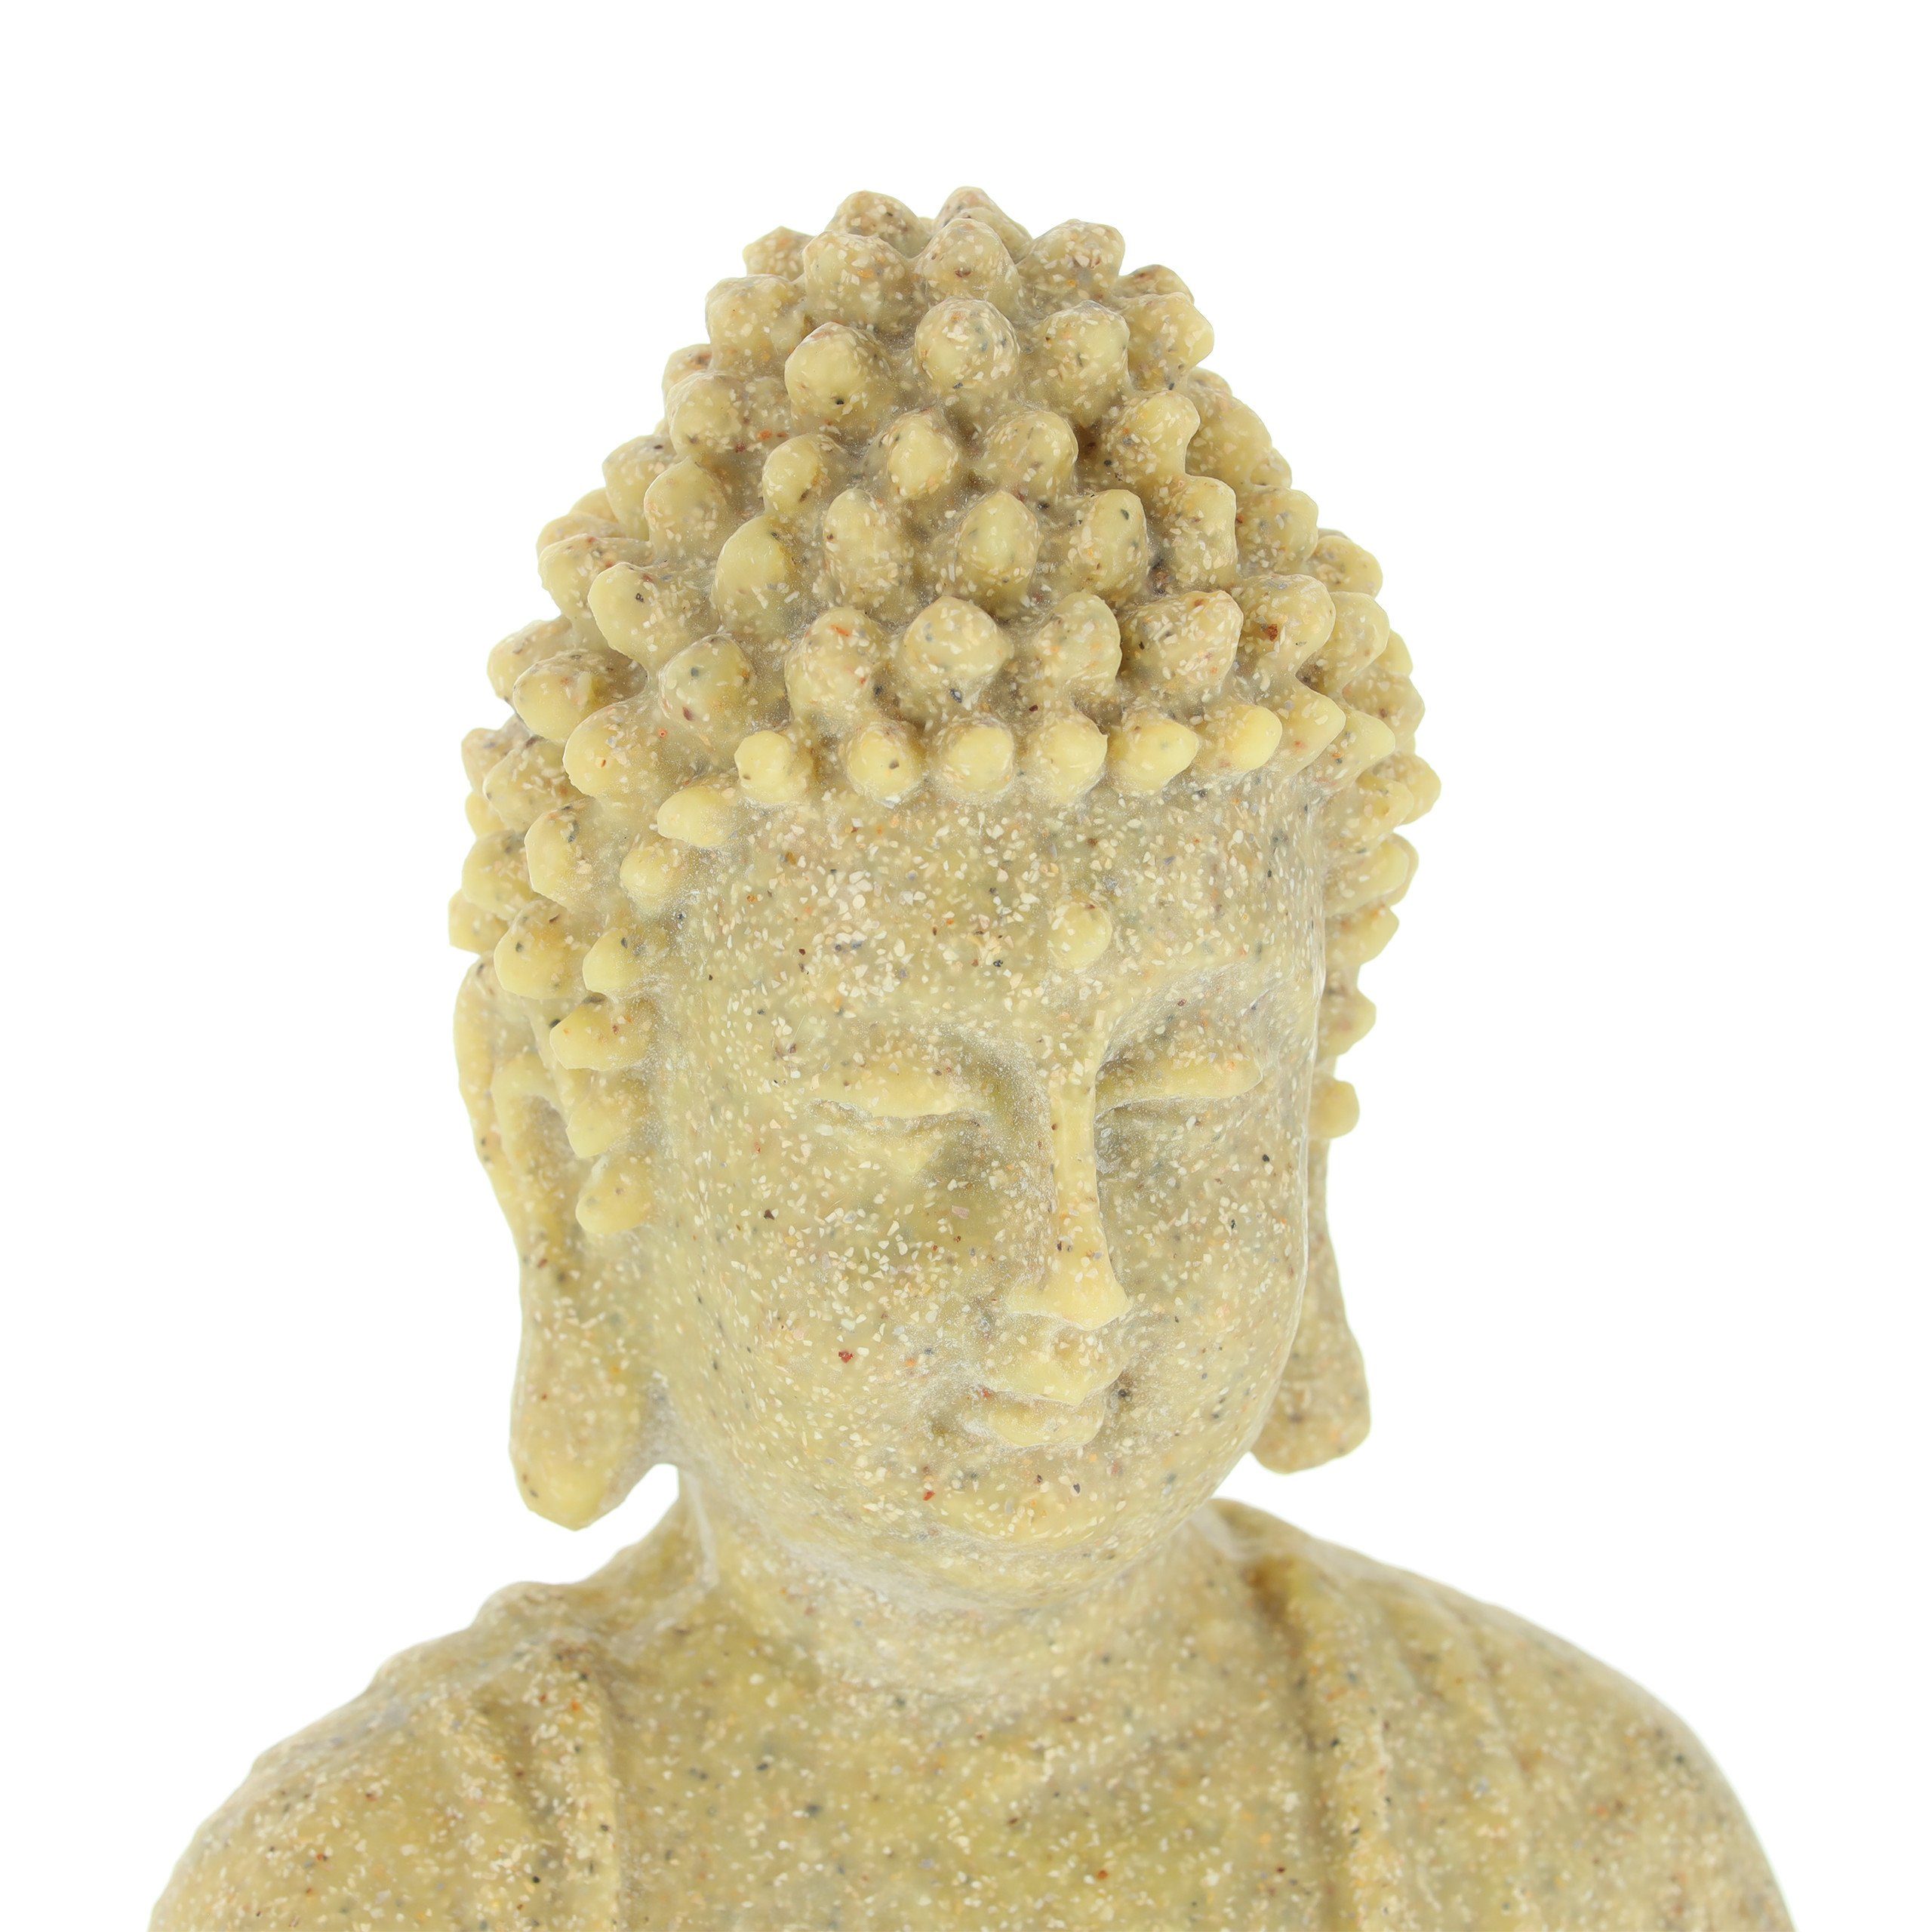 relaxdays Buddhafigur Buddha Figur sitzend Sand Beige cm, 30